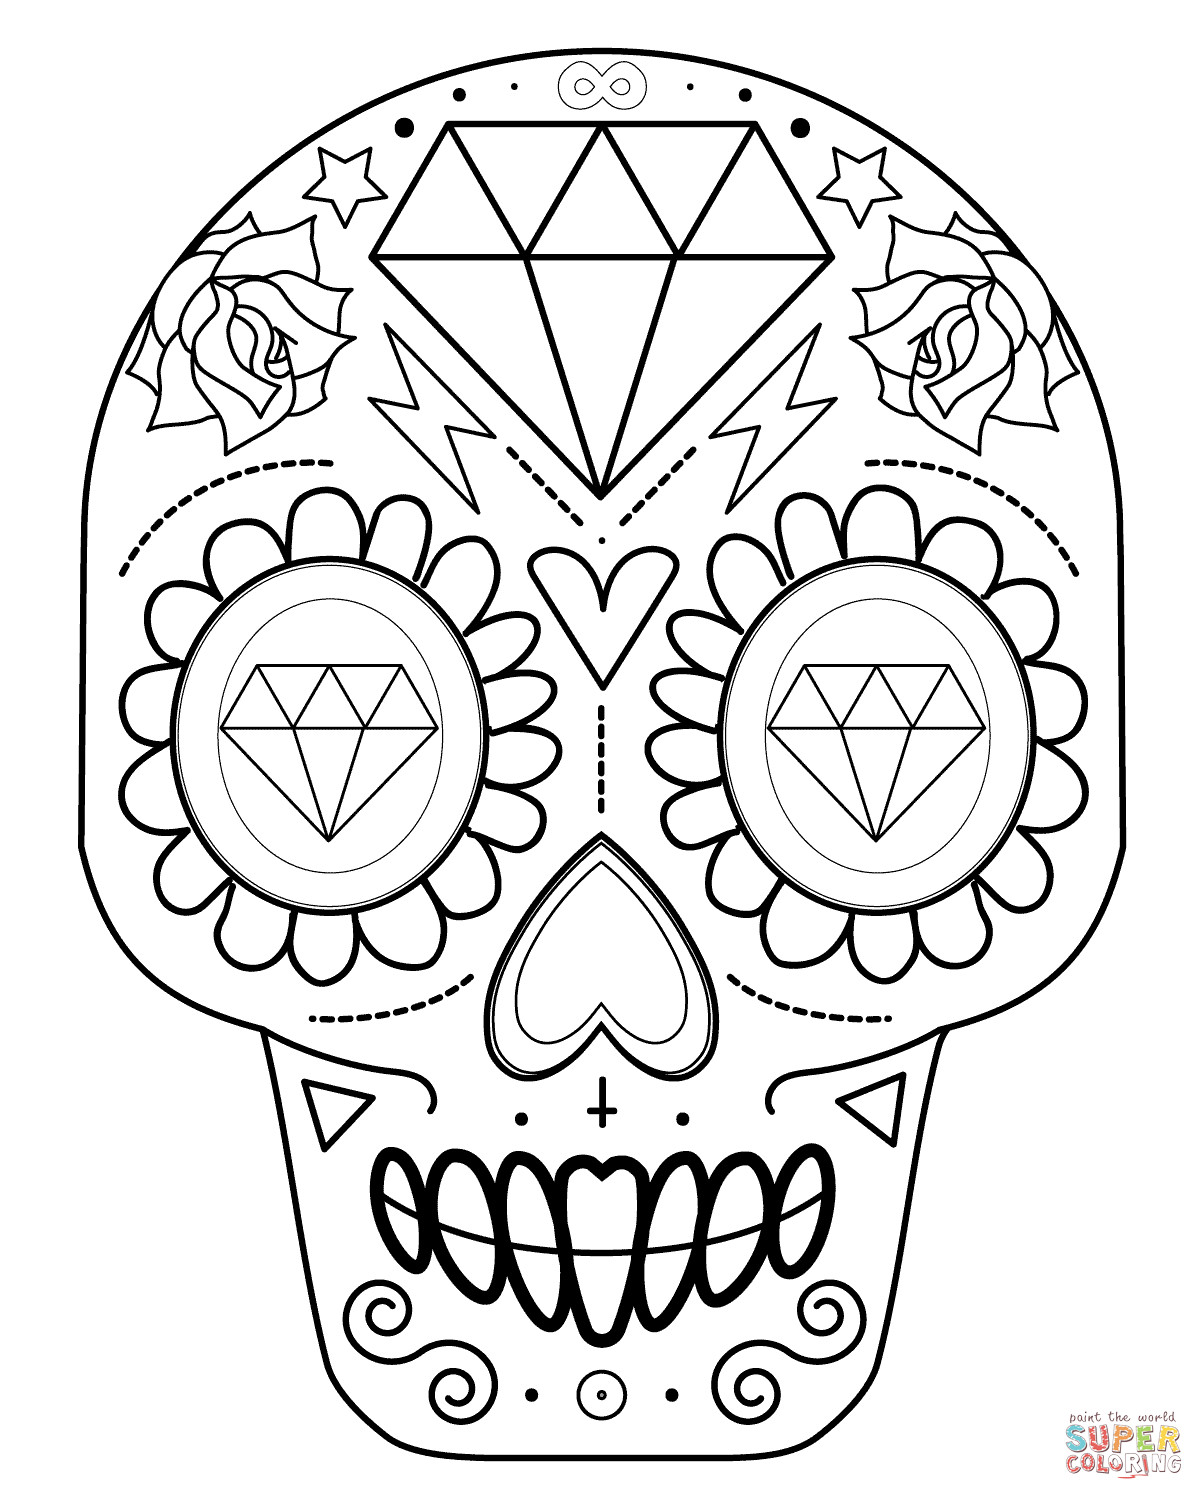 Printable Sugar Skulls Coloring Pages
 Easy Sugar Skull Coloring Pages Coloring Home